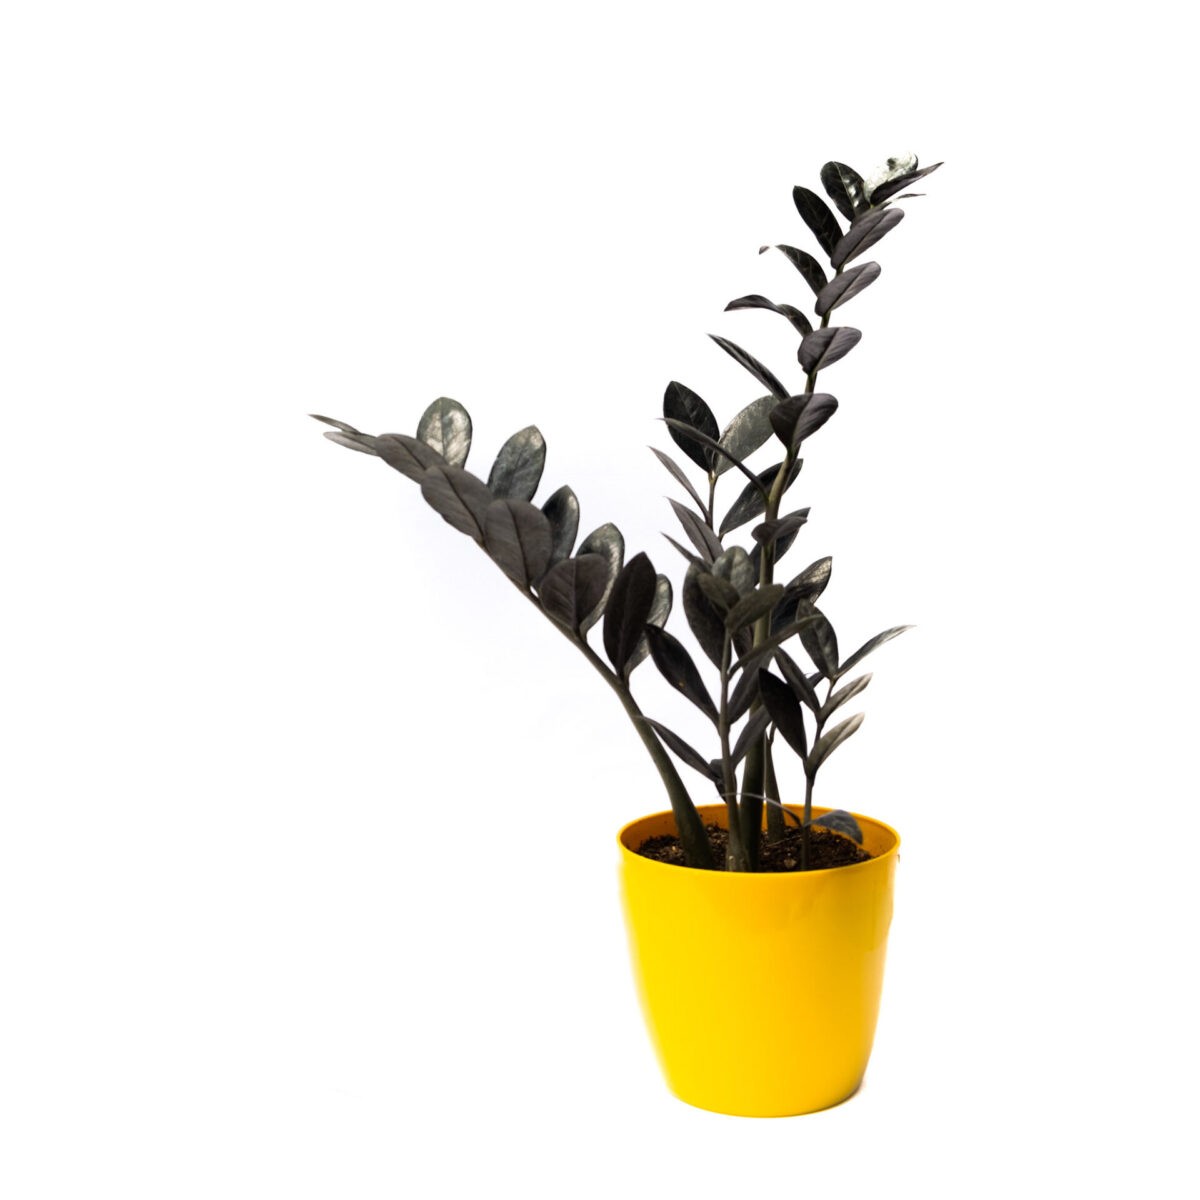 Black ZZ plant with yellow pot